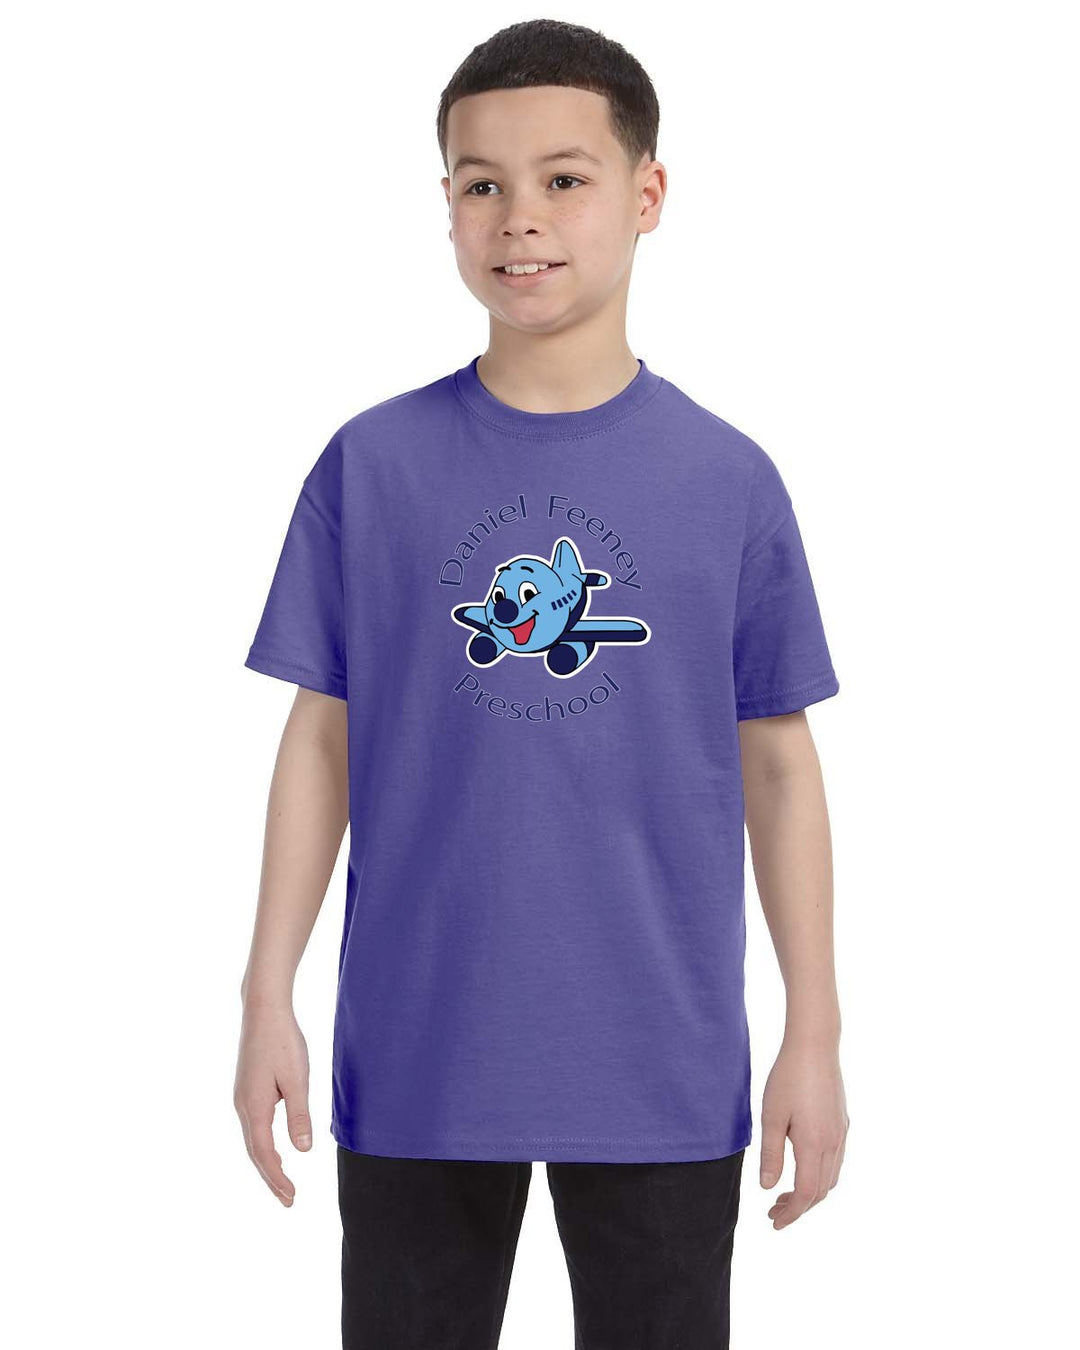 Daniel Feeney Youth T-Shirt (G500B)